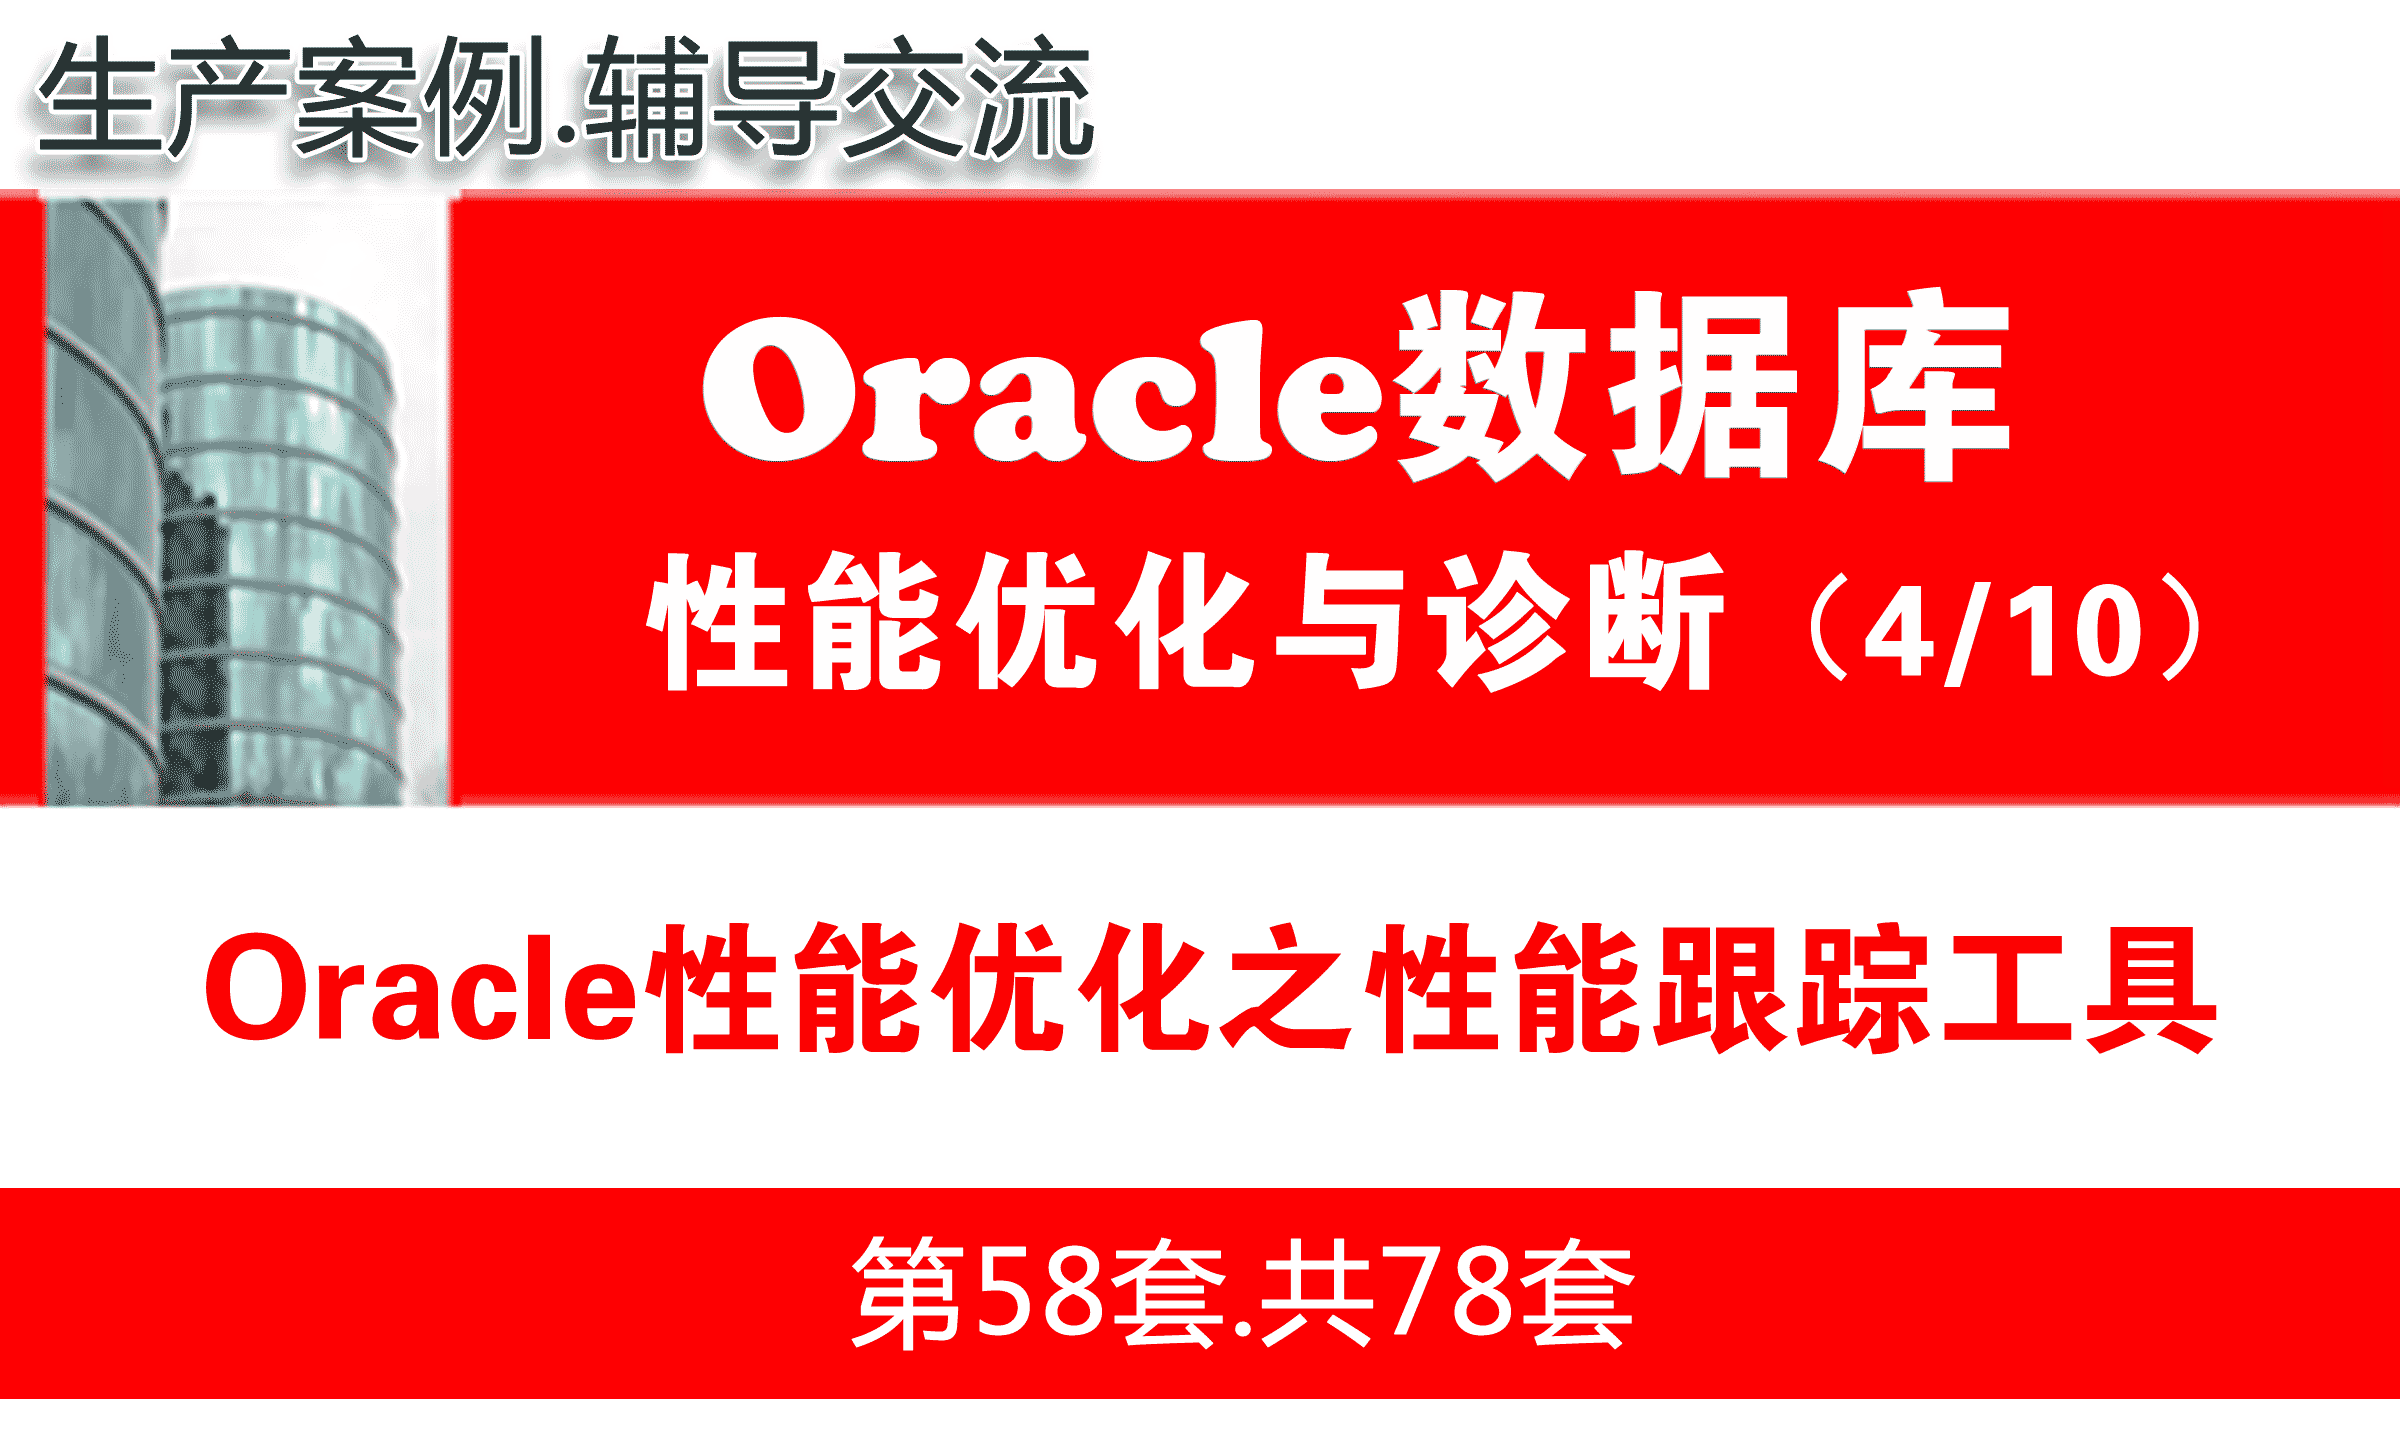  Oracle Performance Optimization Performance Tracking Tool_OOracle Performance Optimization and Troubleshooting Tutorial 04